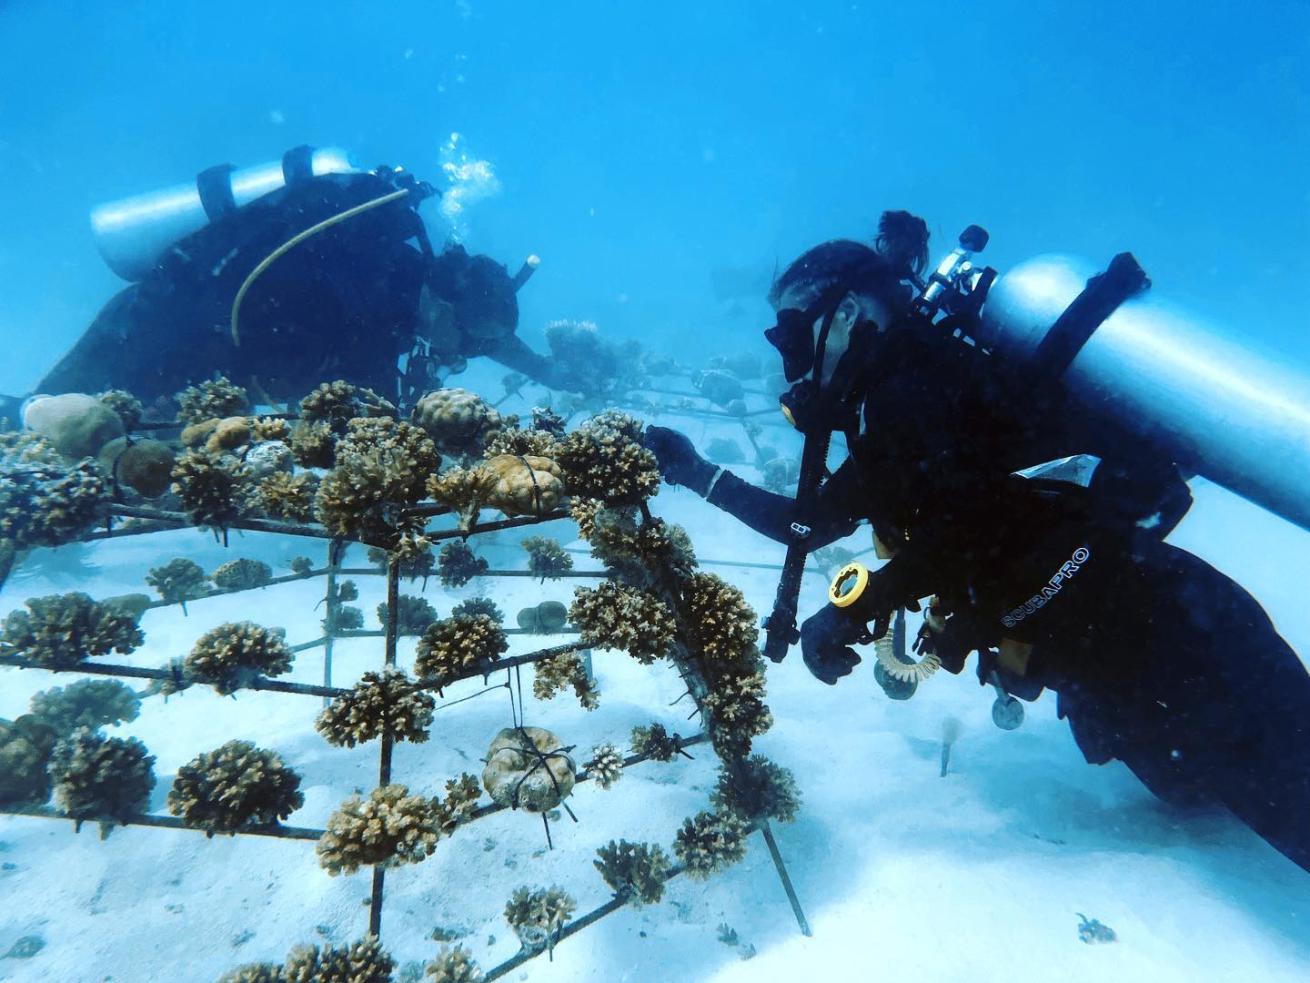 Divers replanting corals in ocean